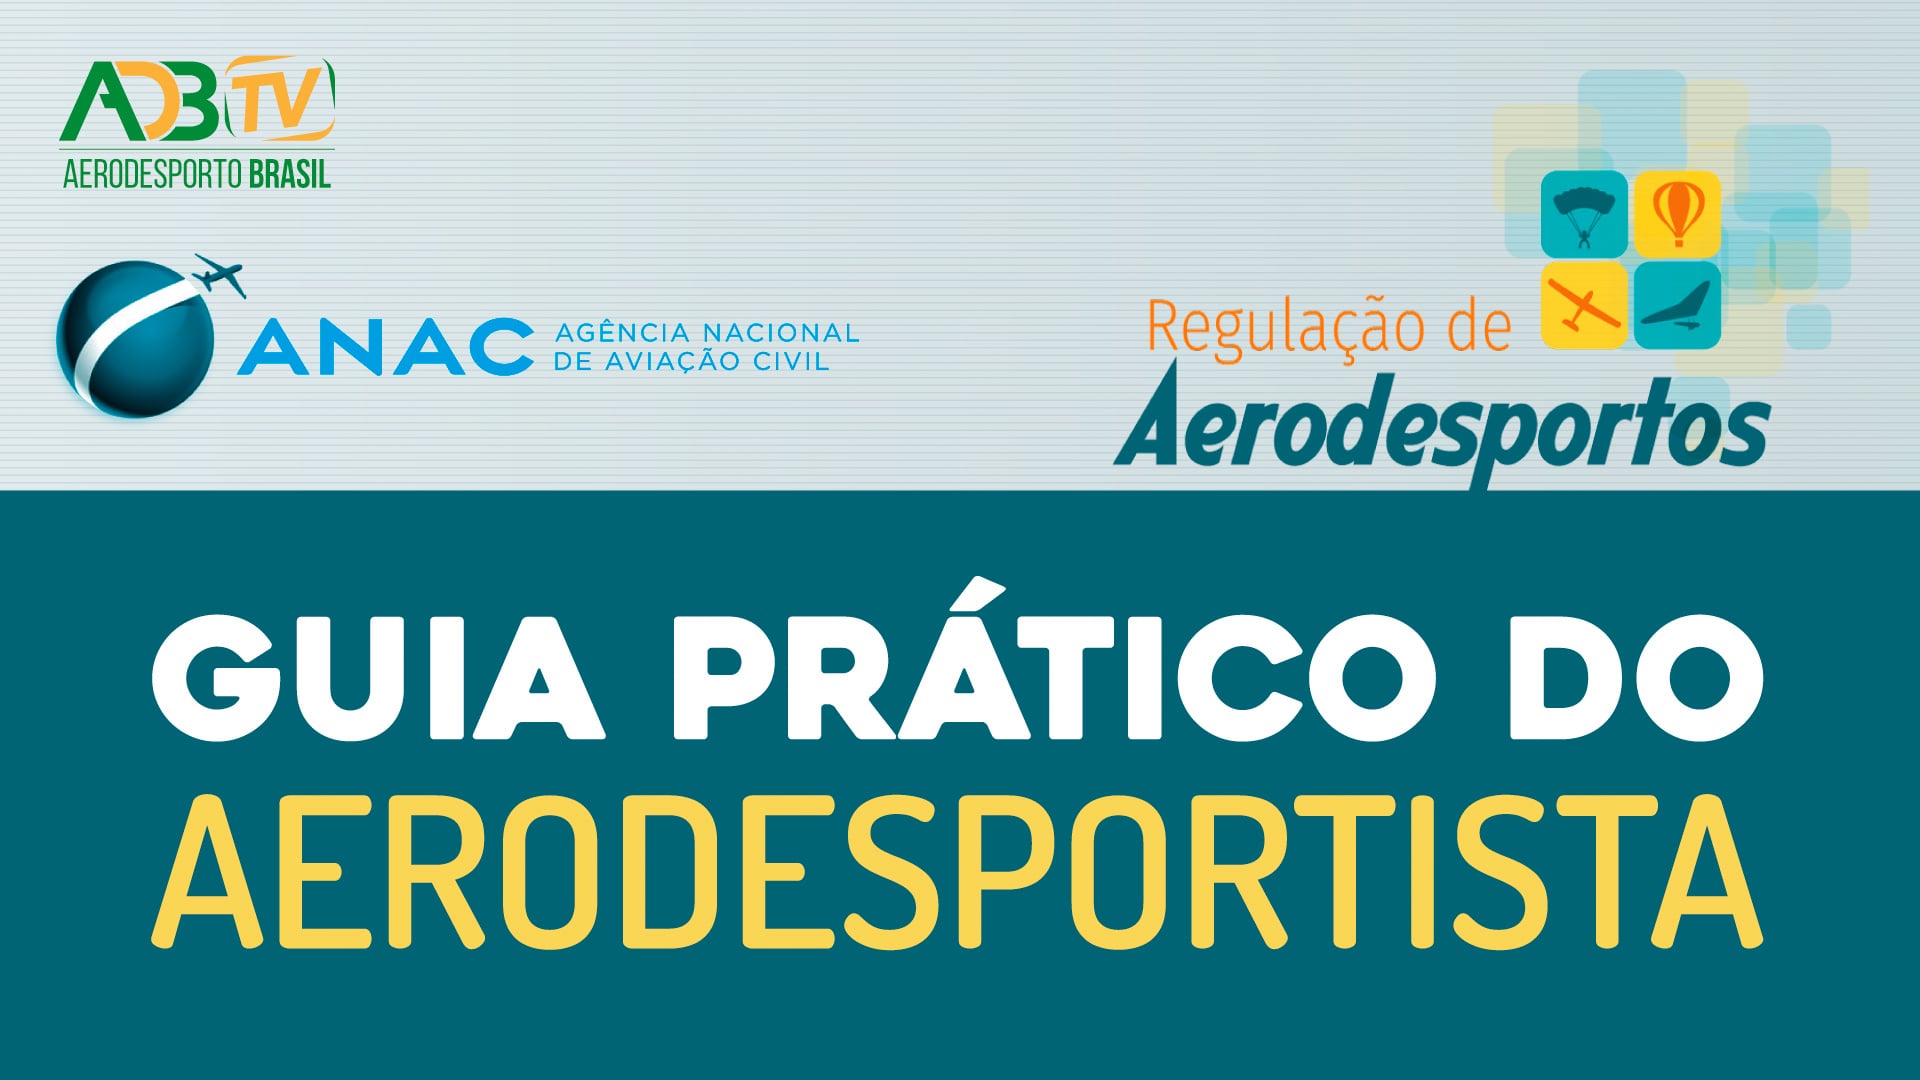 Guia Pratico do Aerodesportista - ANAC